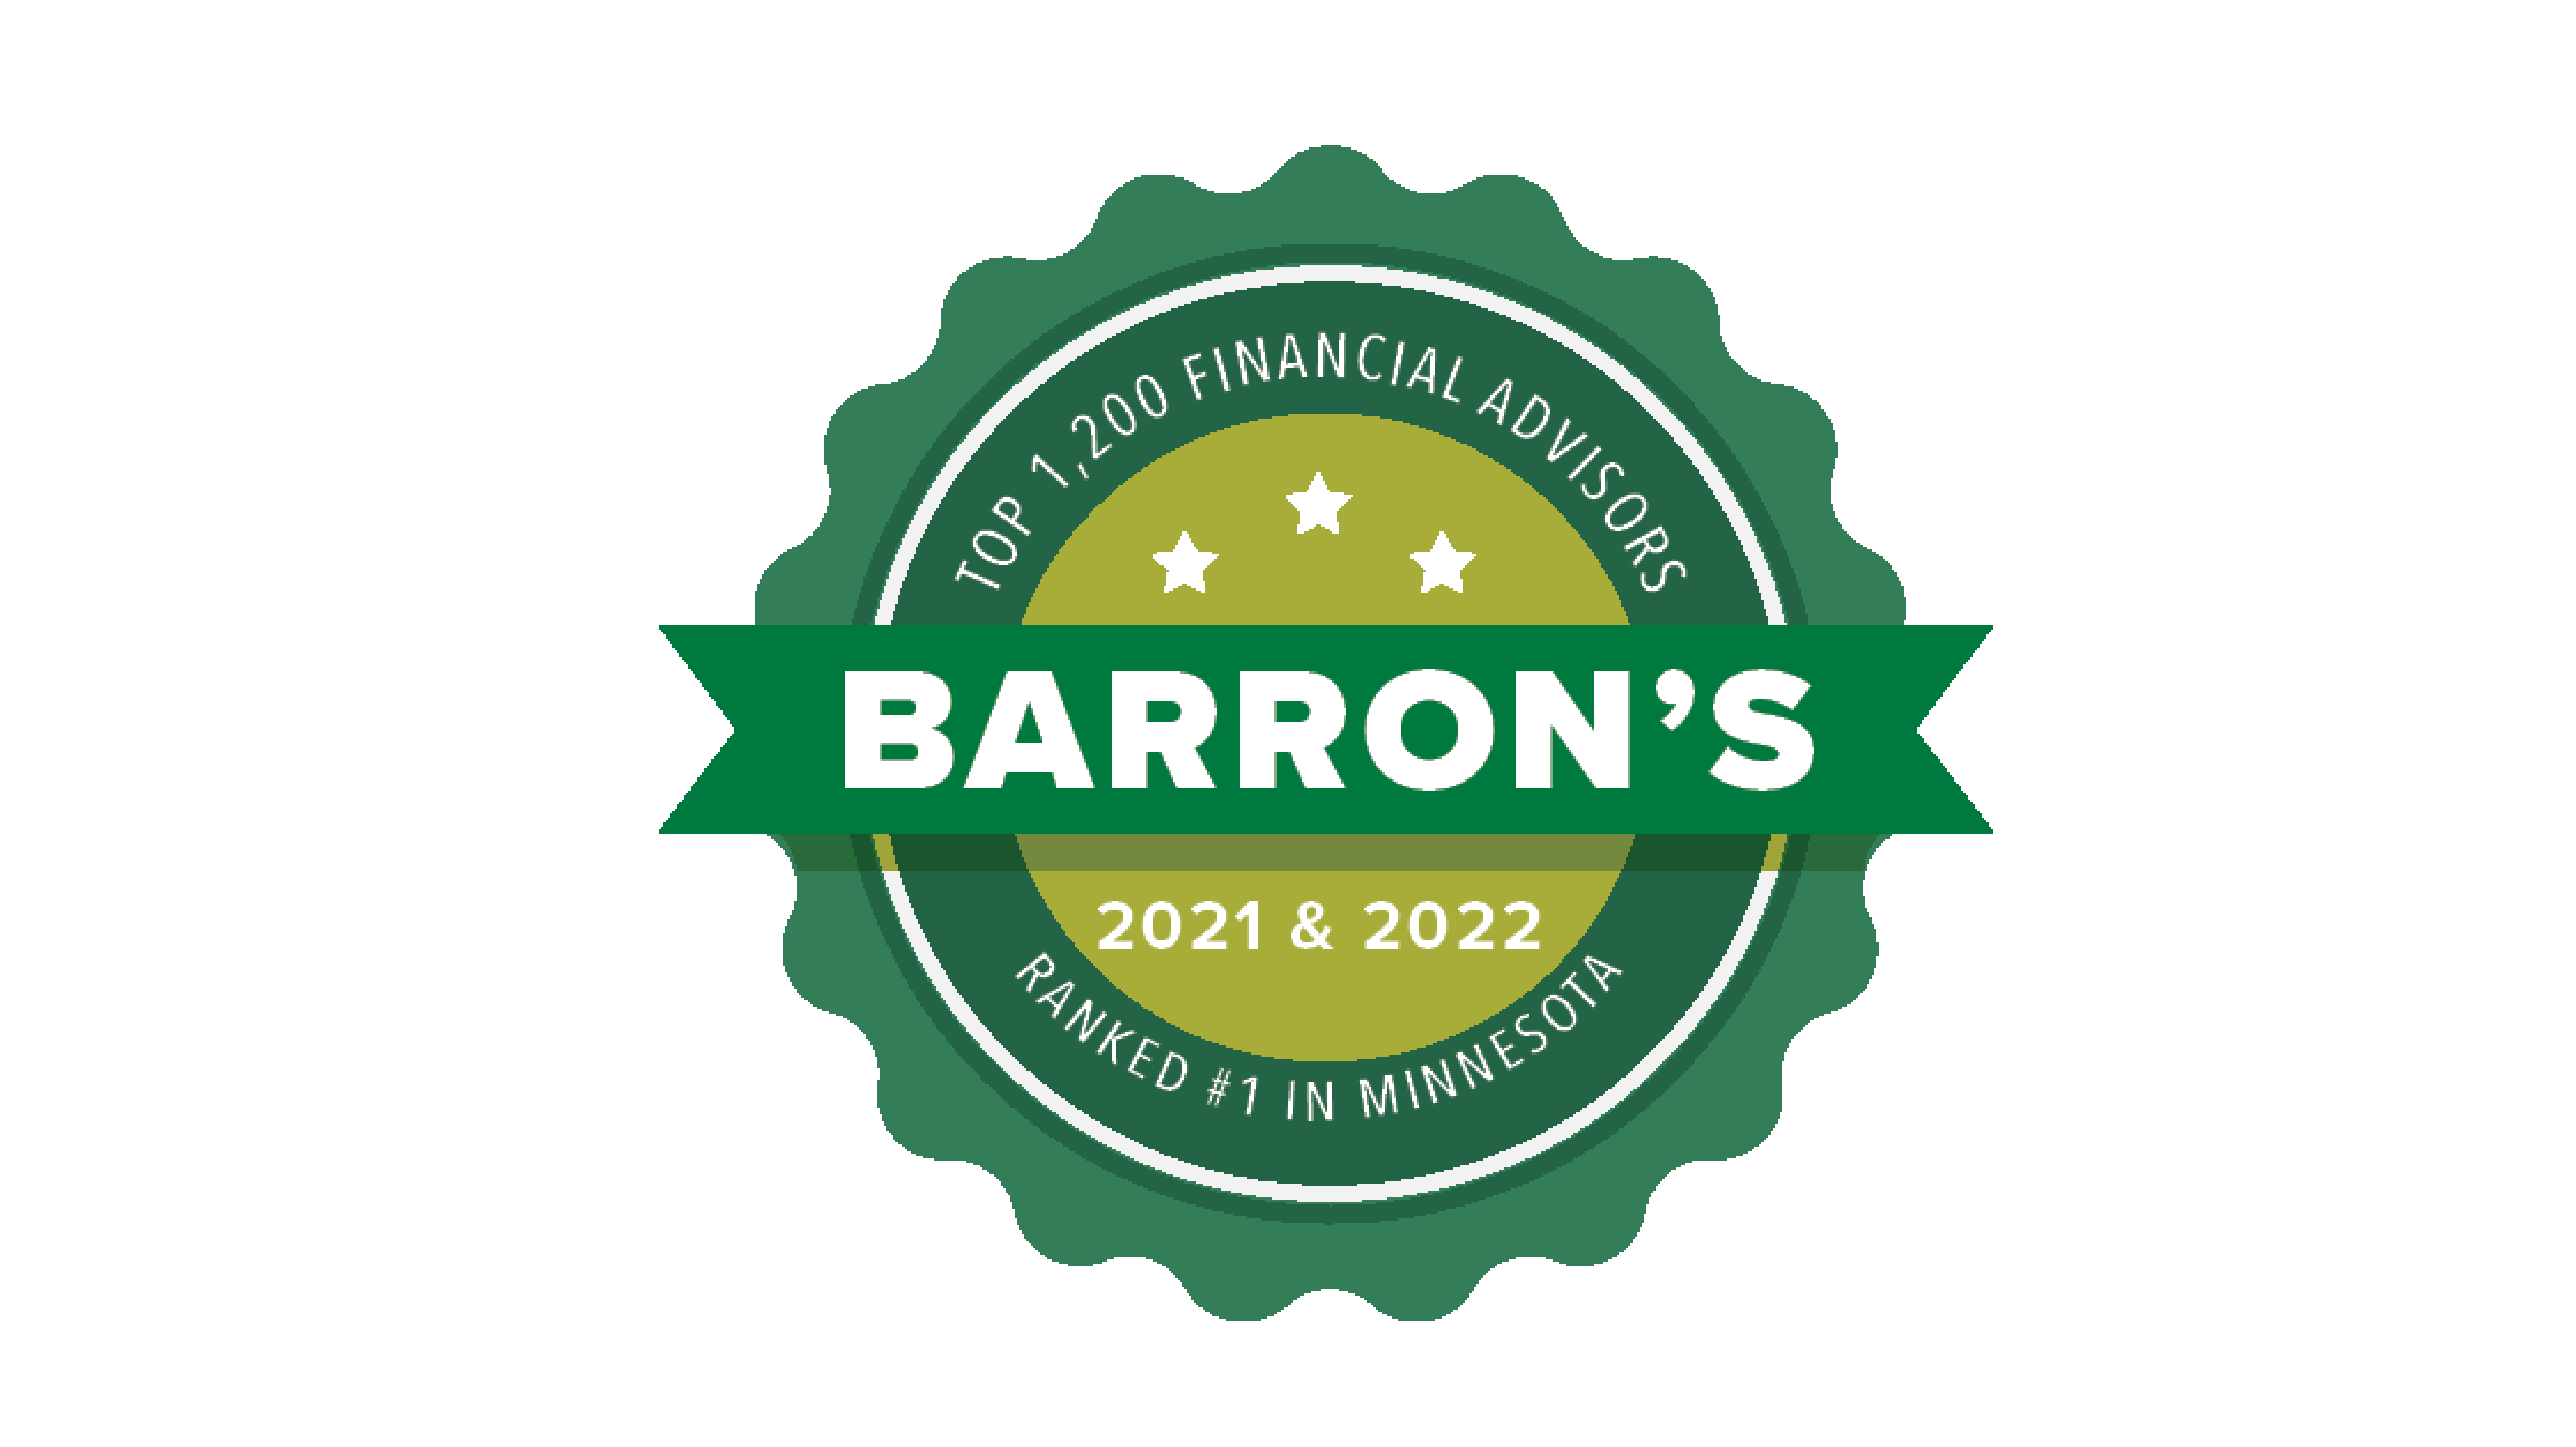 Barron's 2022 wide